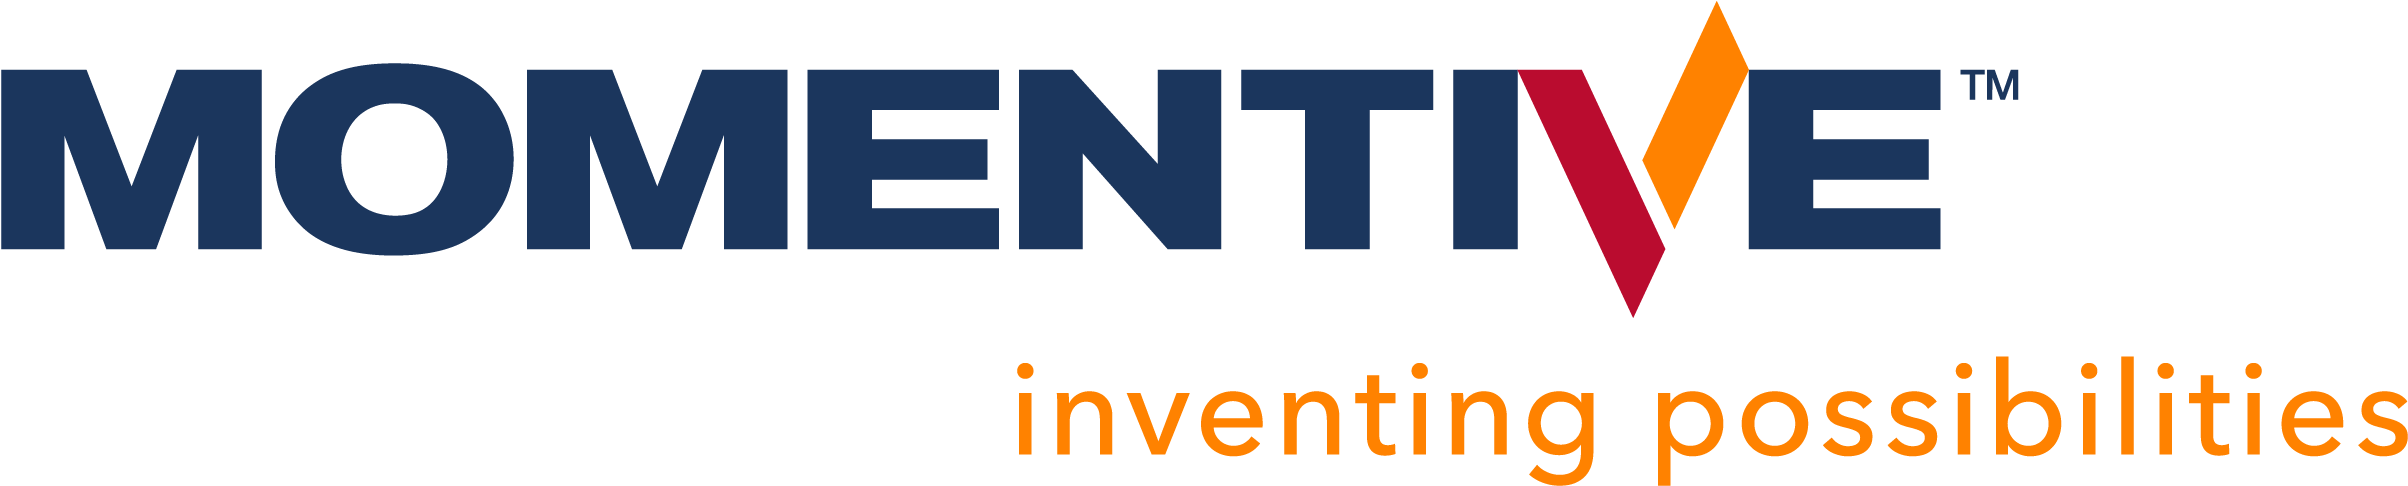 Momentive Logo Branding PNG